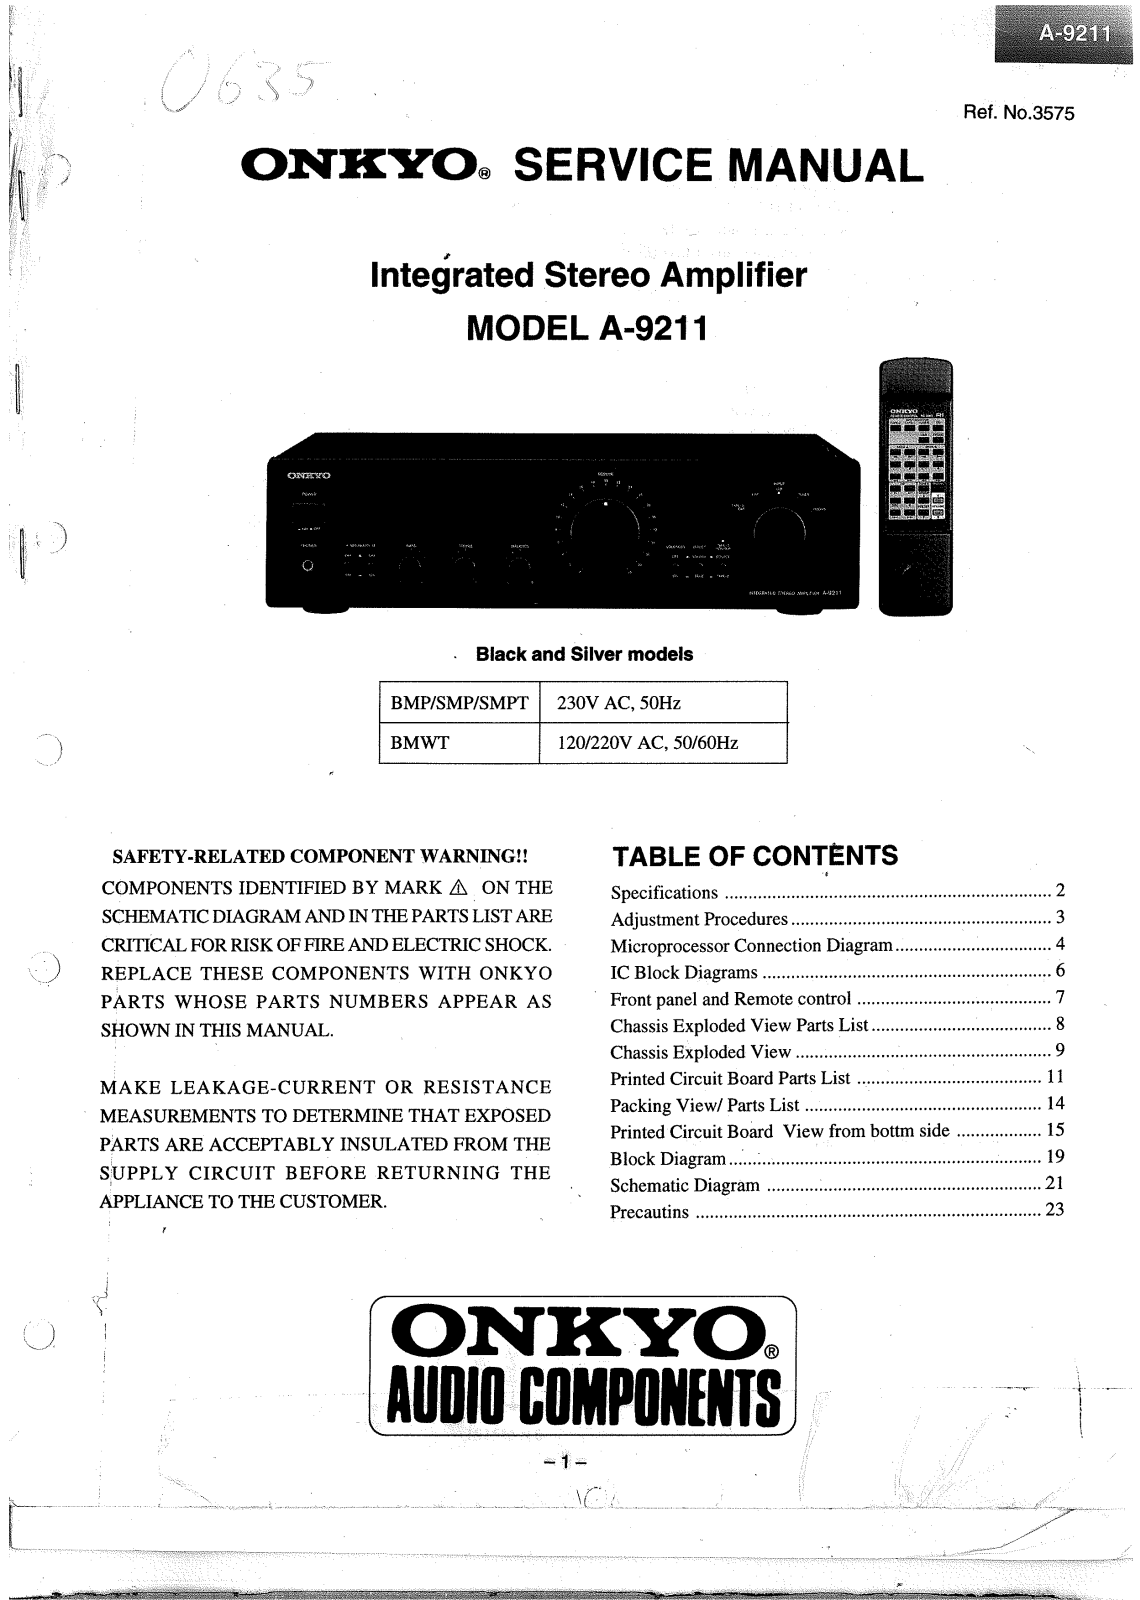 Onkyo A-9211 Service Manual